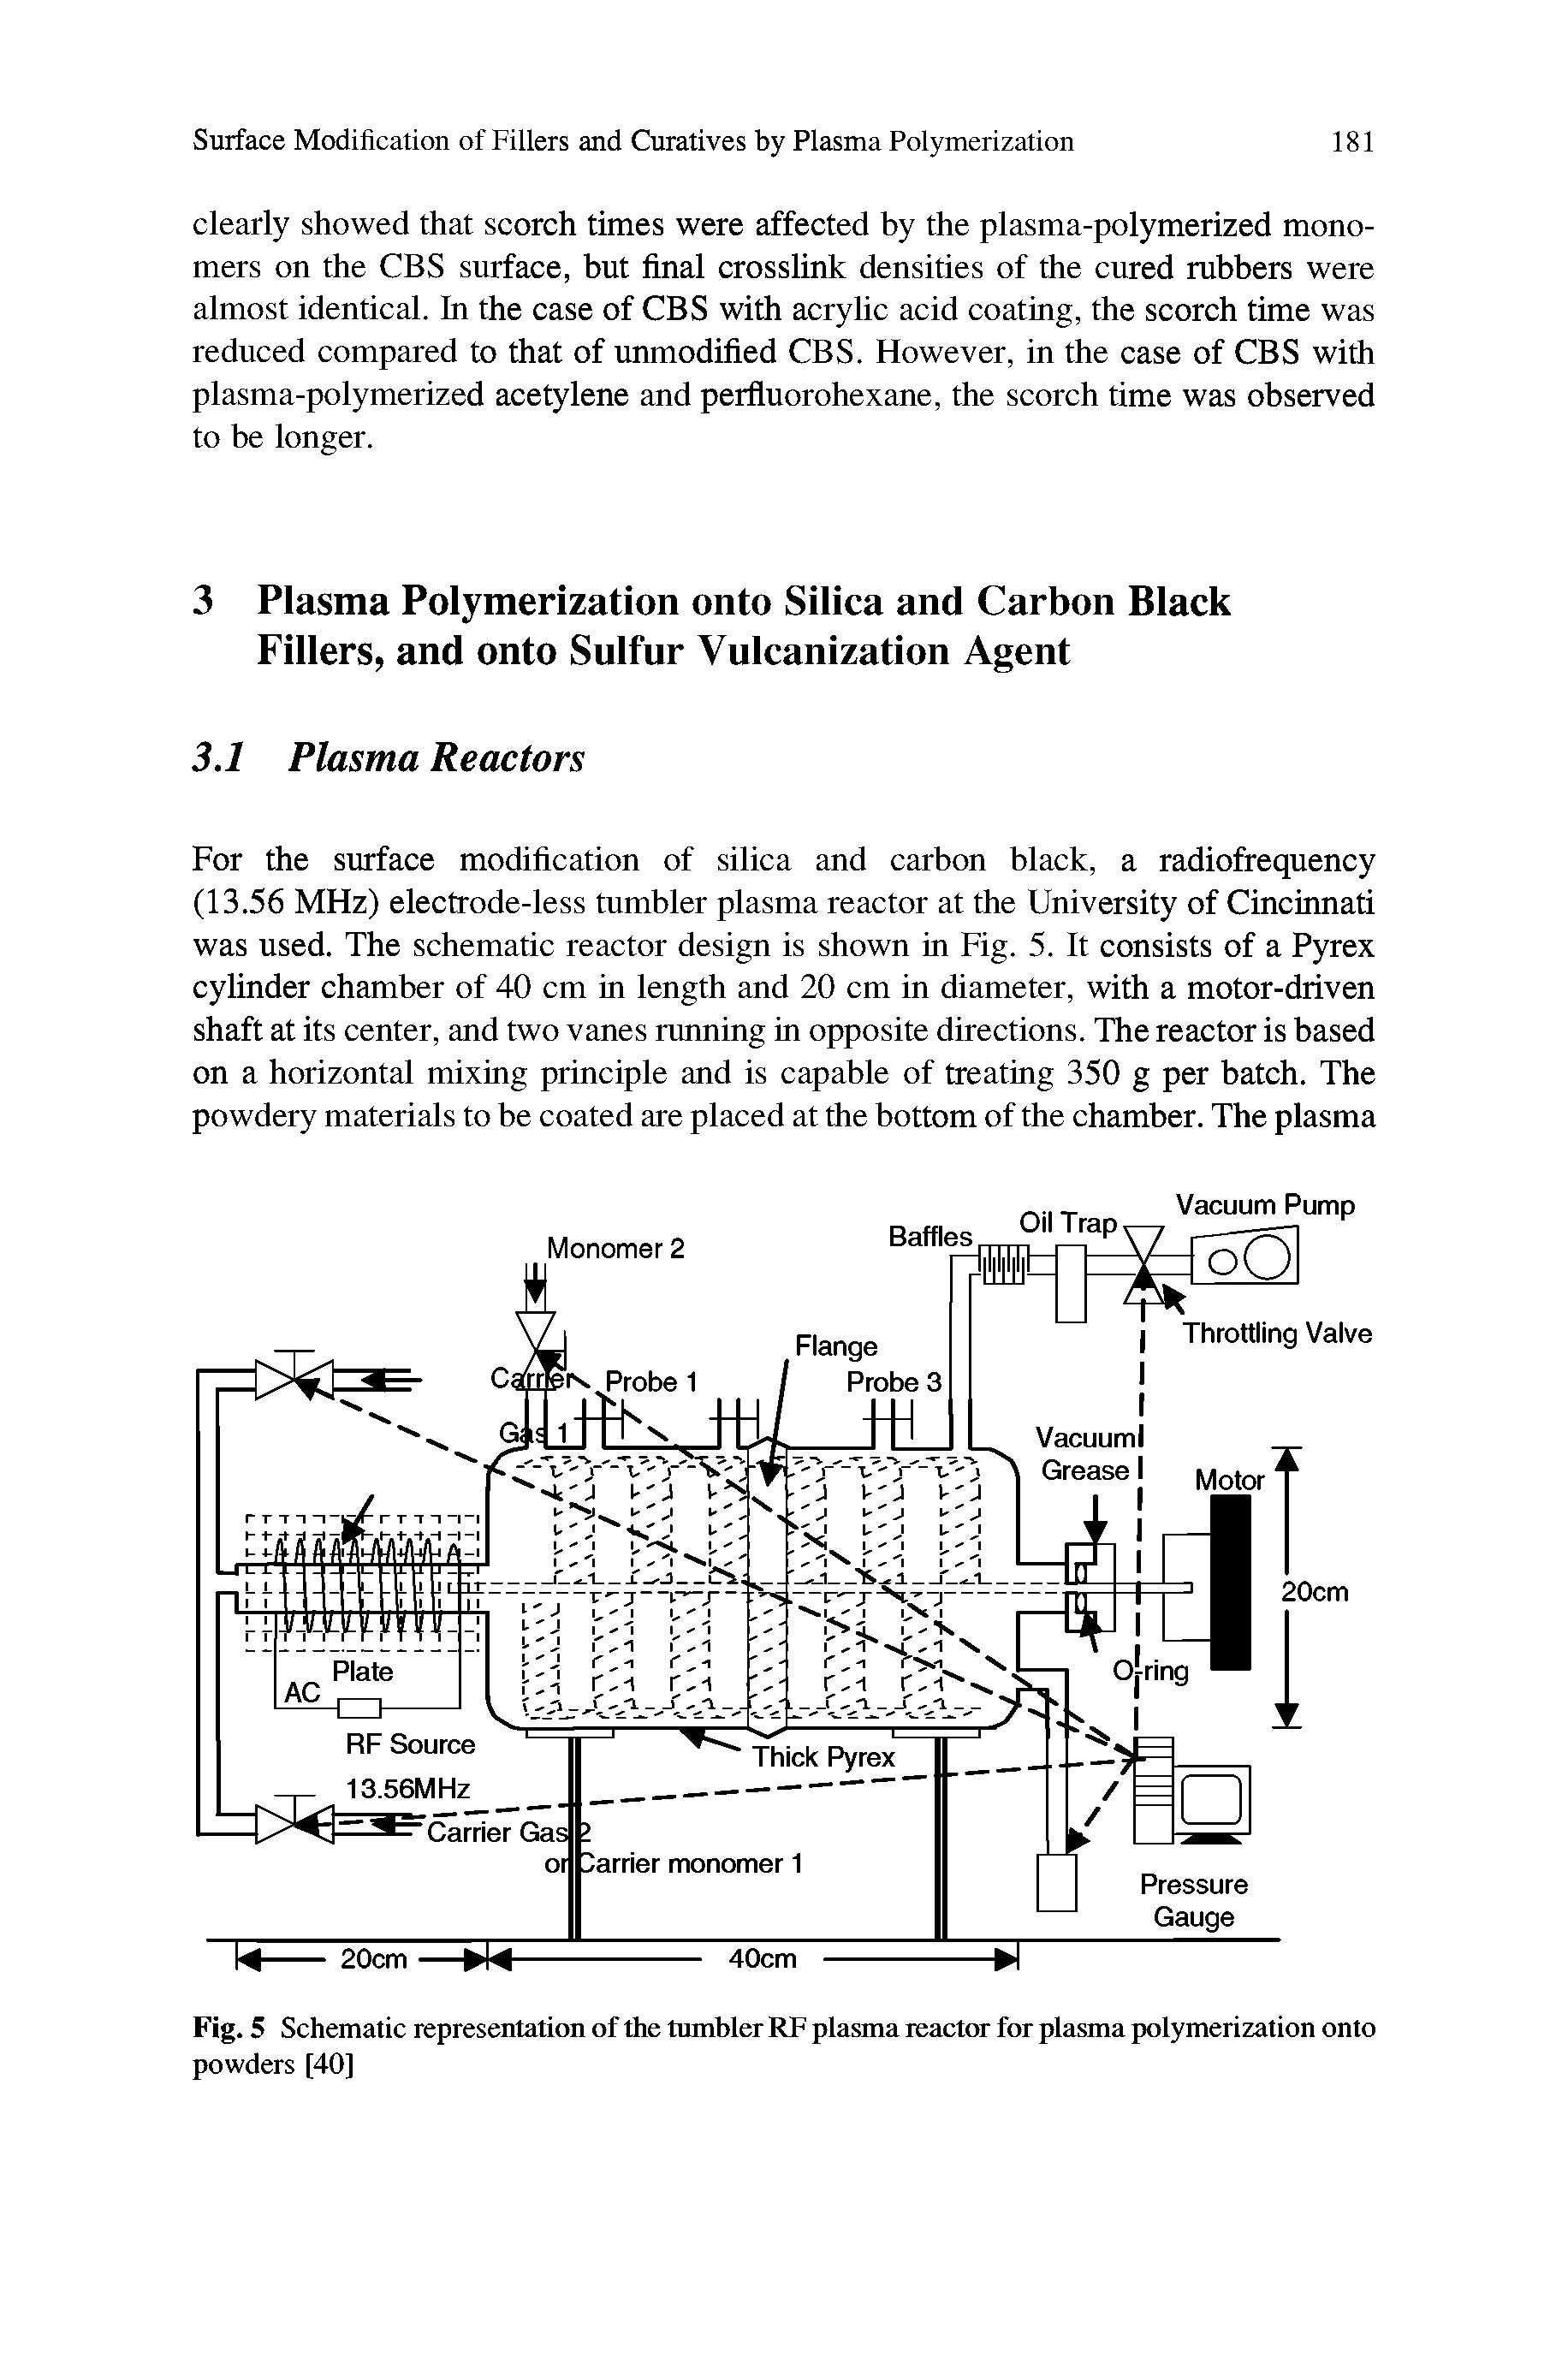 Fig. 5 Schematic representation of the tumbler RF plasma reactor for plasma polymerization onto...